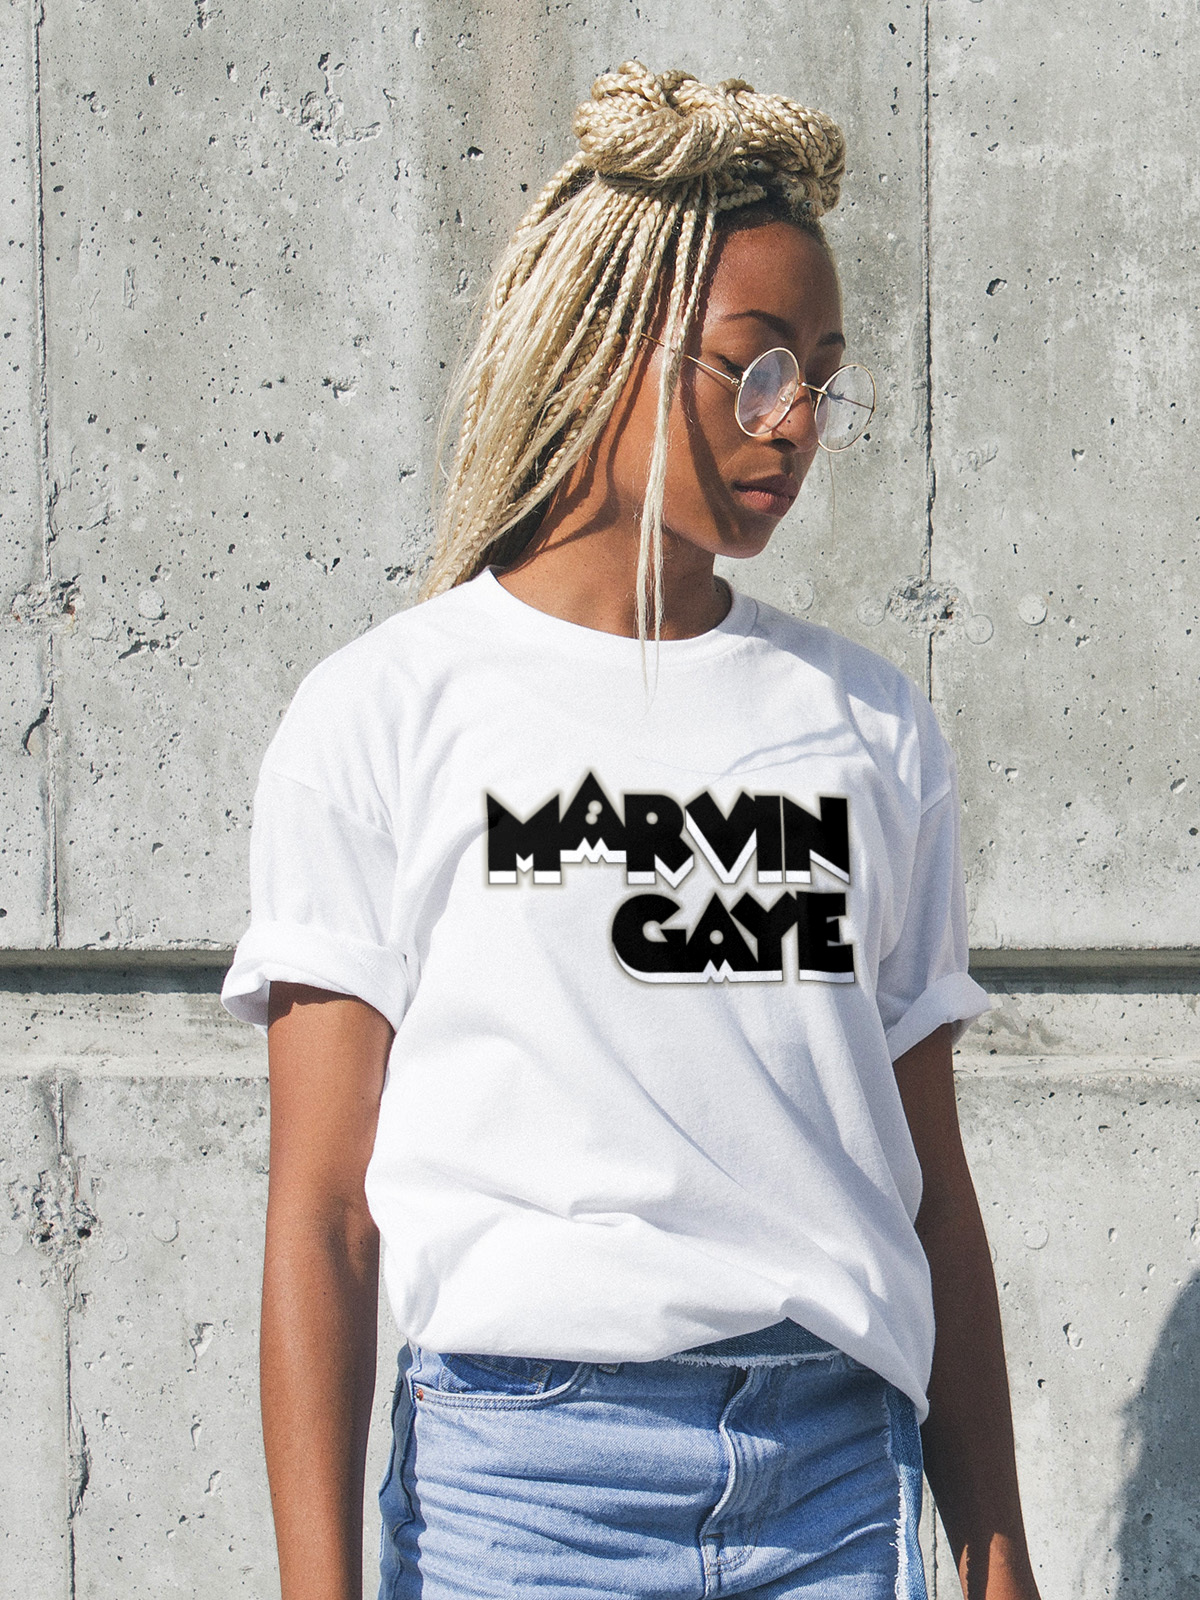 Marvin Gaye Tee Shirt